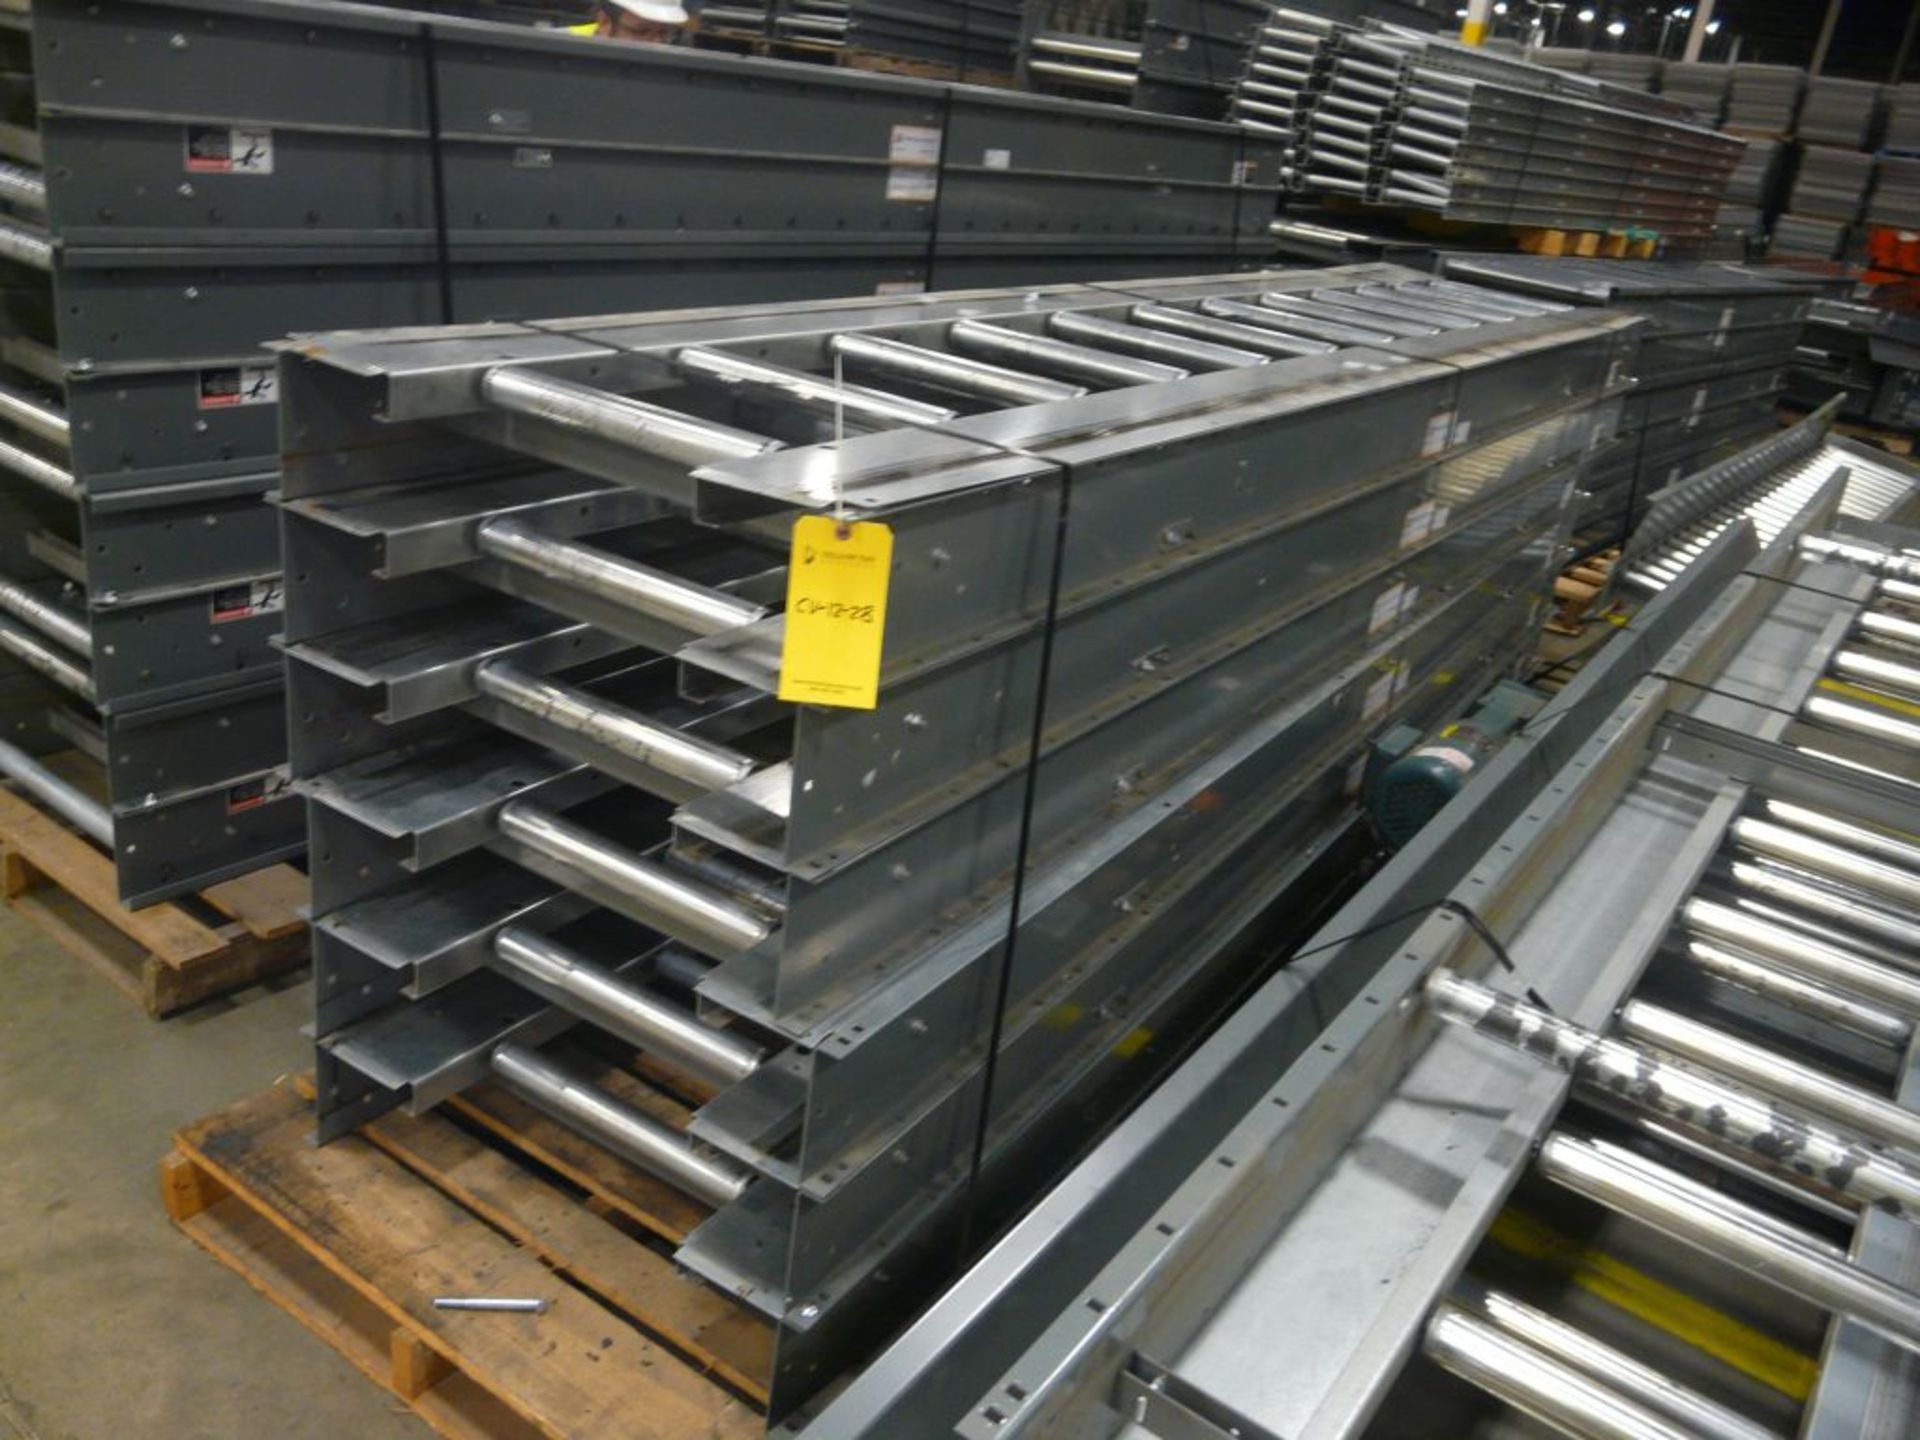 Lot of (45) 200 Belt Intermediate Conveyors - 12'L x 28"W; Tag: 223712 - $30 Lot Loading Fee